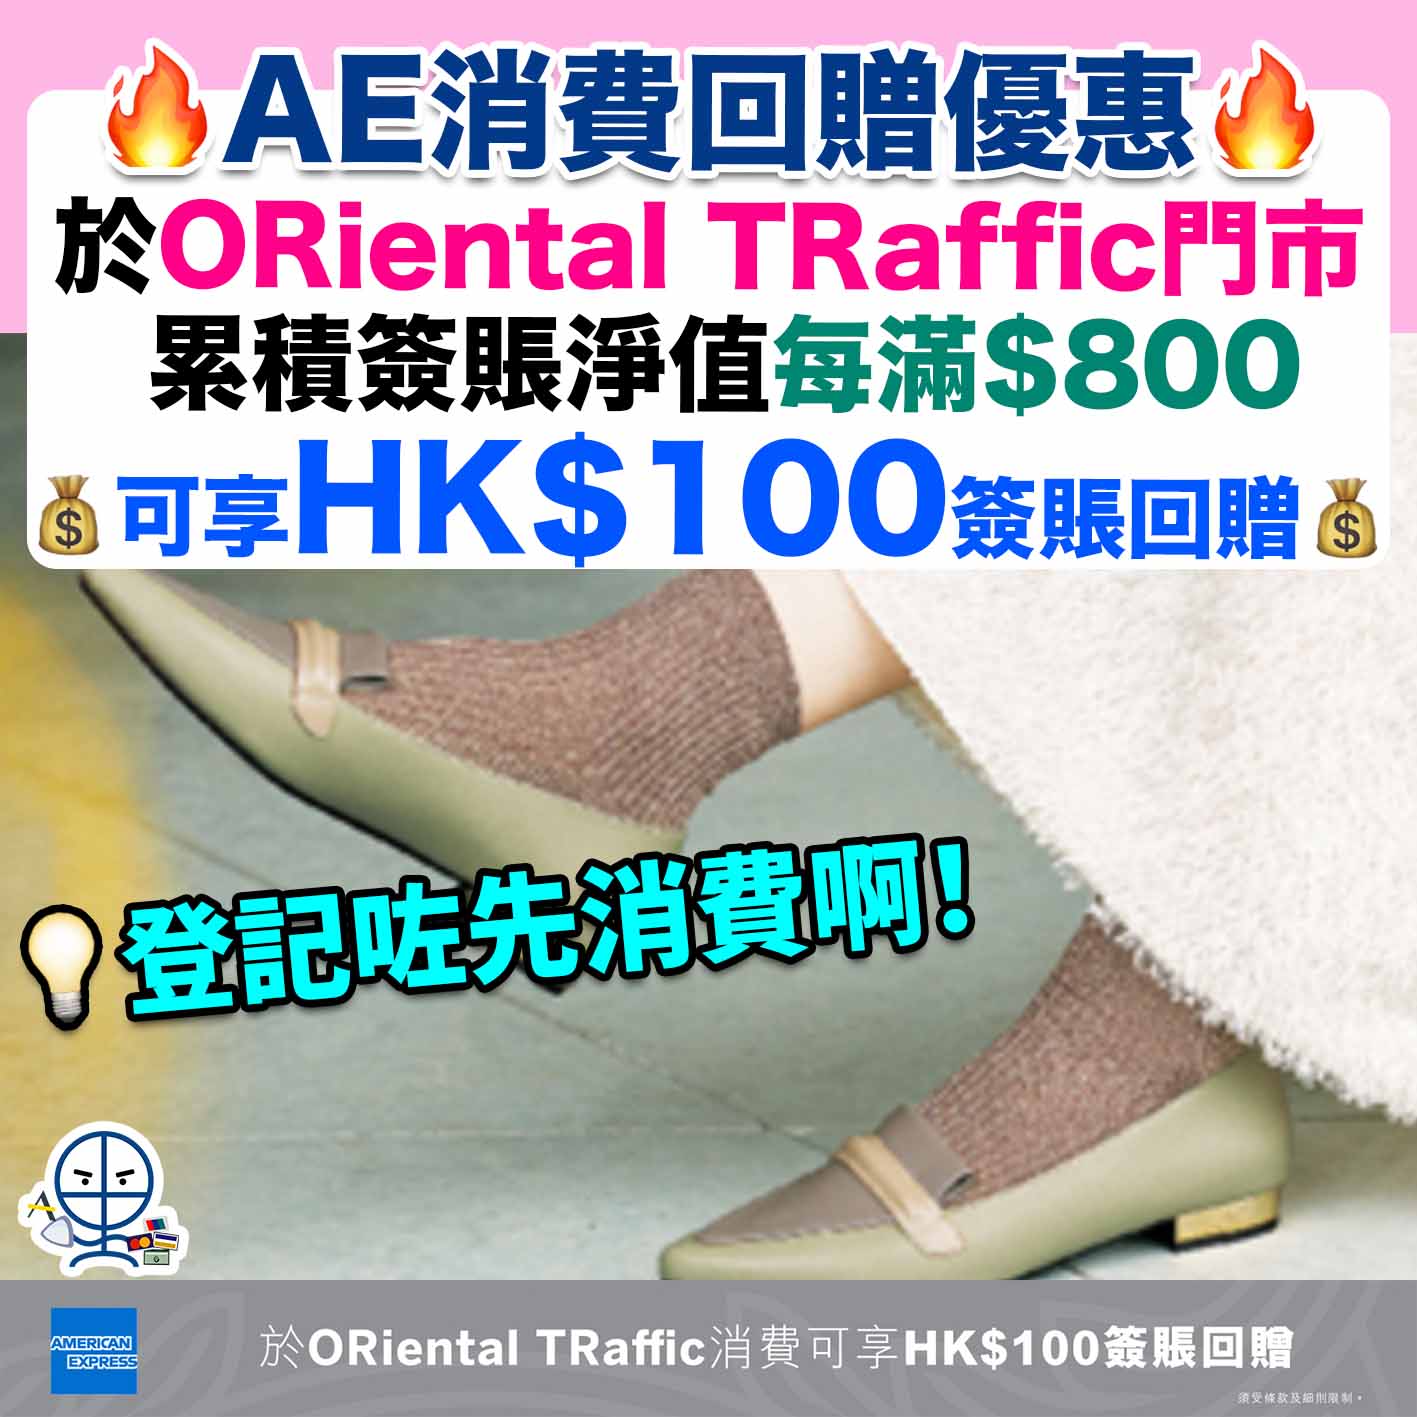 【AE ORiental TRaffic消費回贈】於門市累積簽賬淨值每滿HK$800，可享HK$100簽賬回贈❗️先登記 後消費❗️